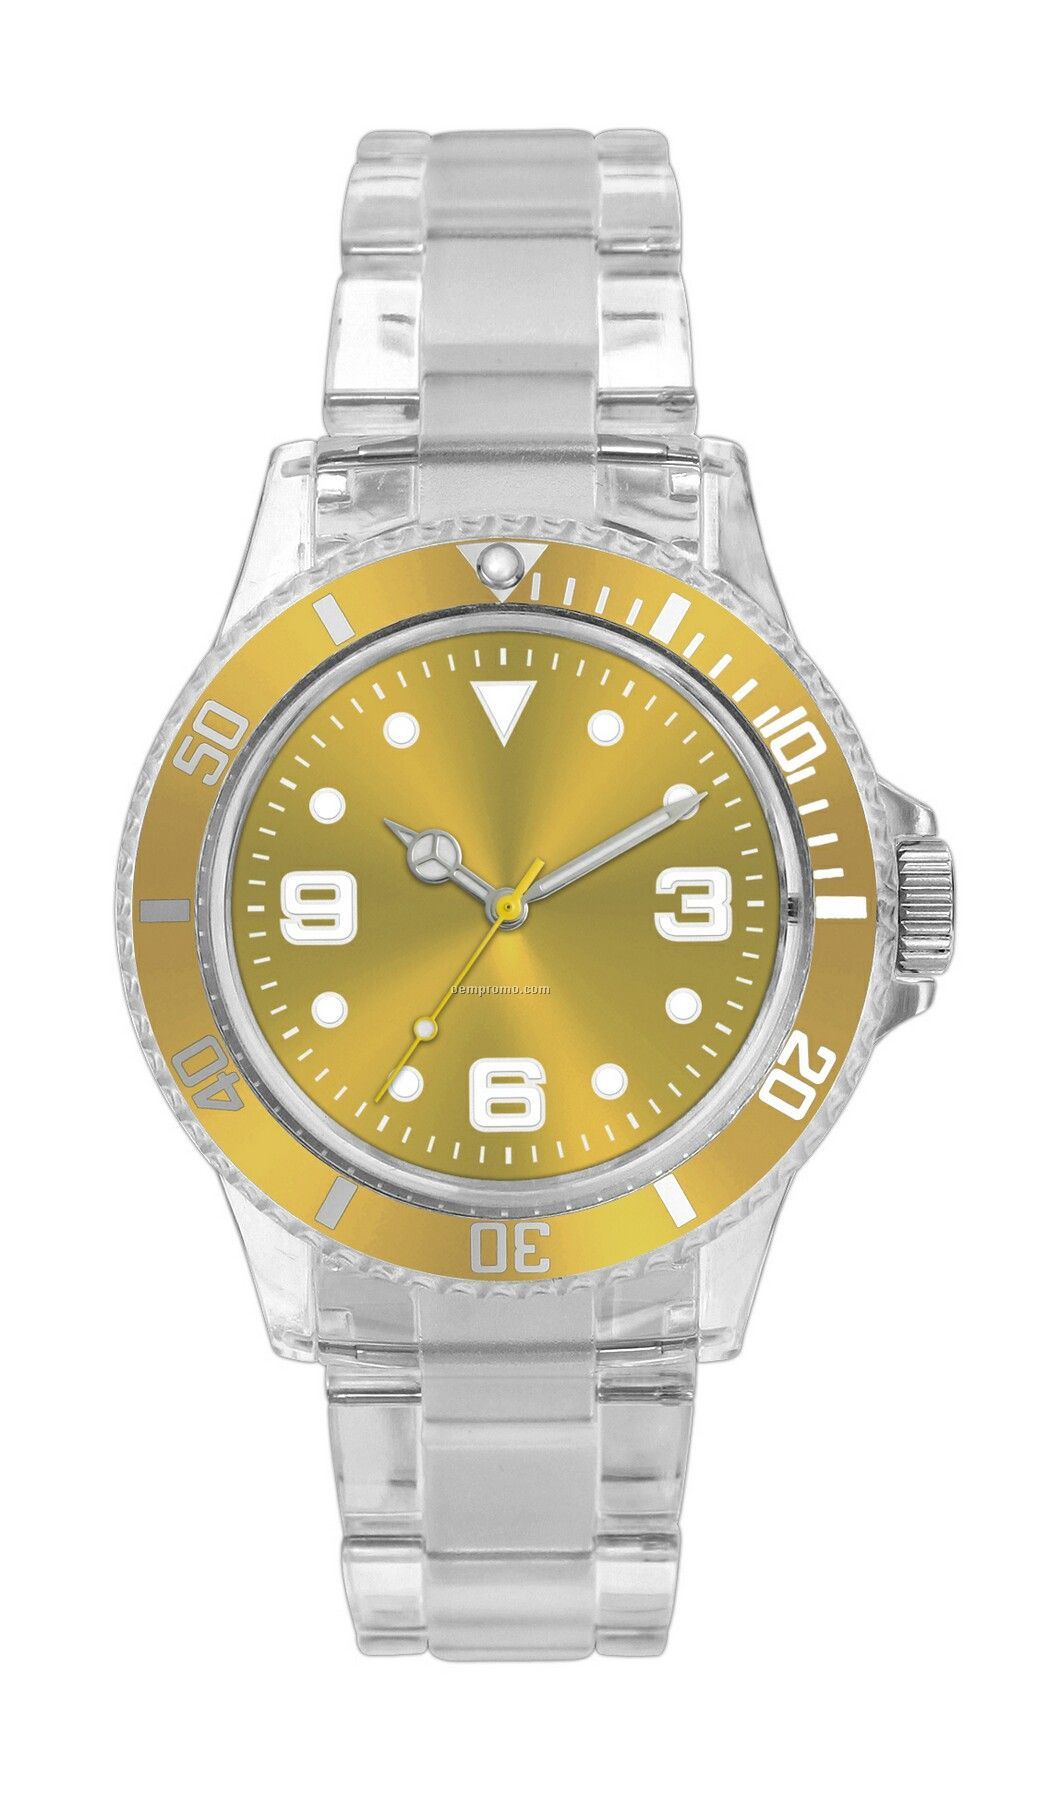 Pedre Polar Watch W/ Yellow Bezel